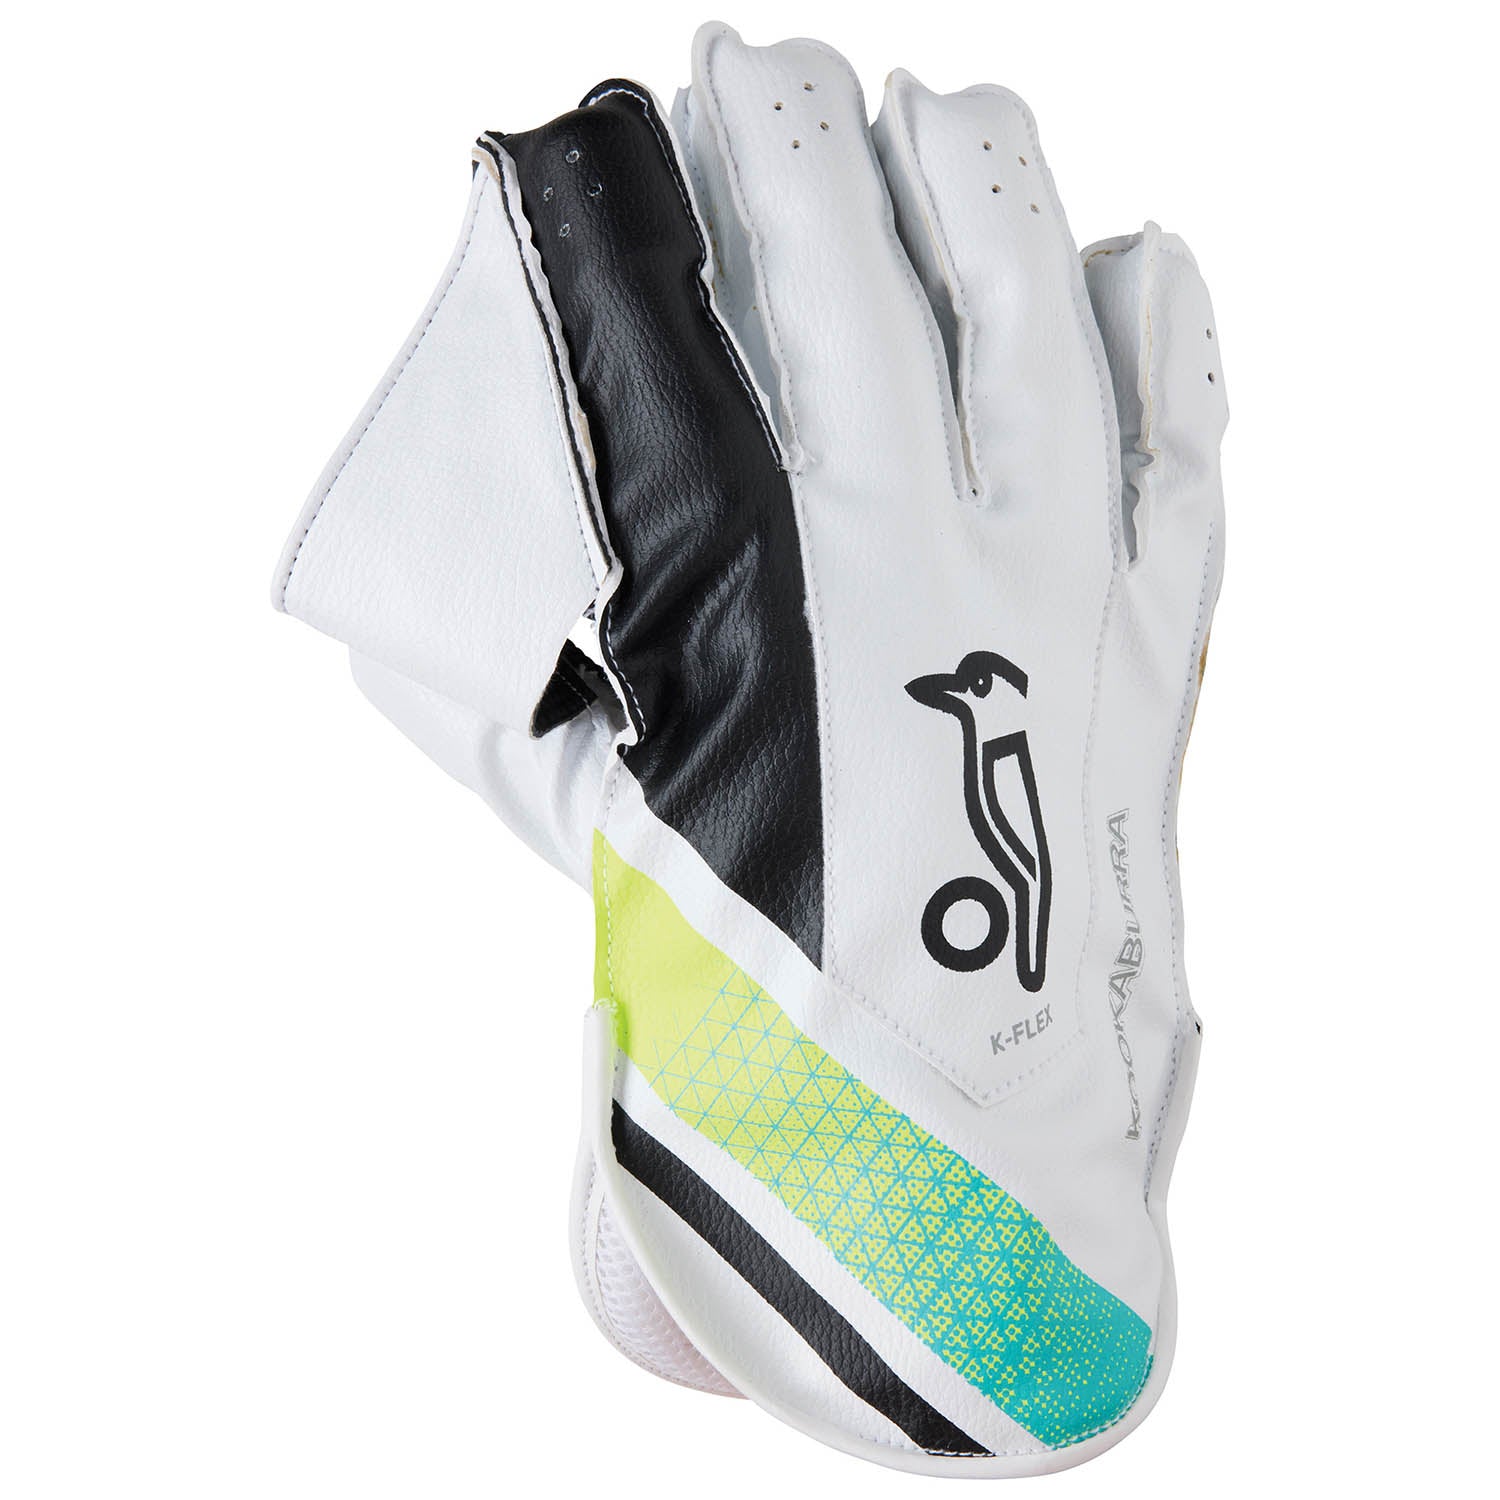 Kookaburra Rapid Pro 3.0 Wicket Keeping Gloves - Best Price online Prokicksports.com